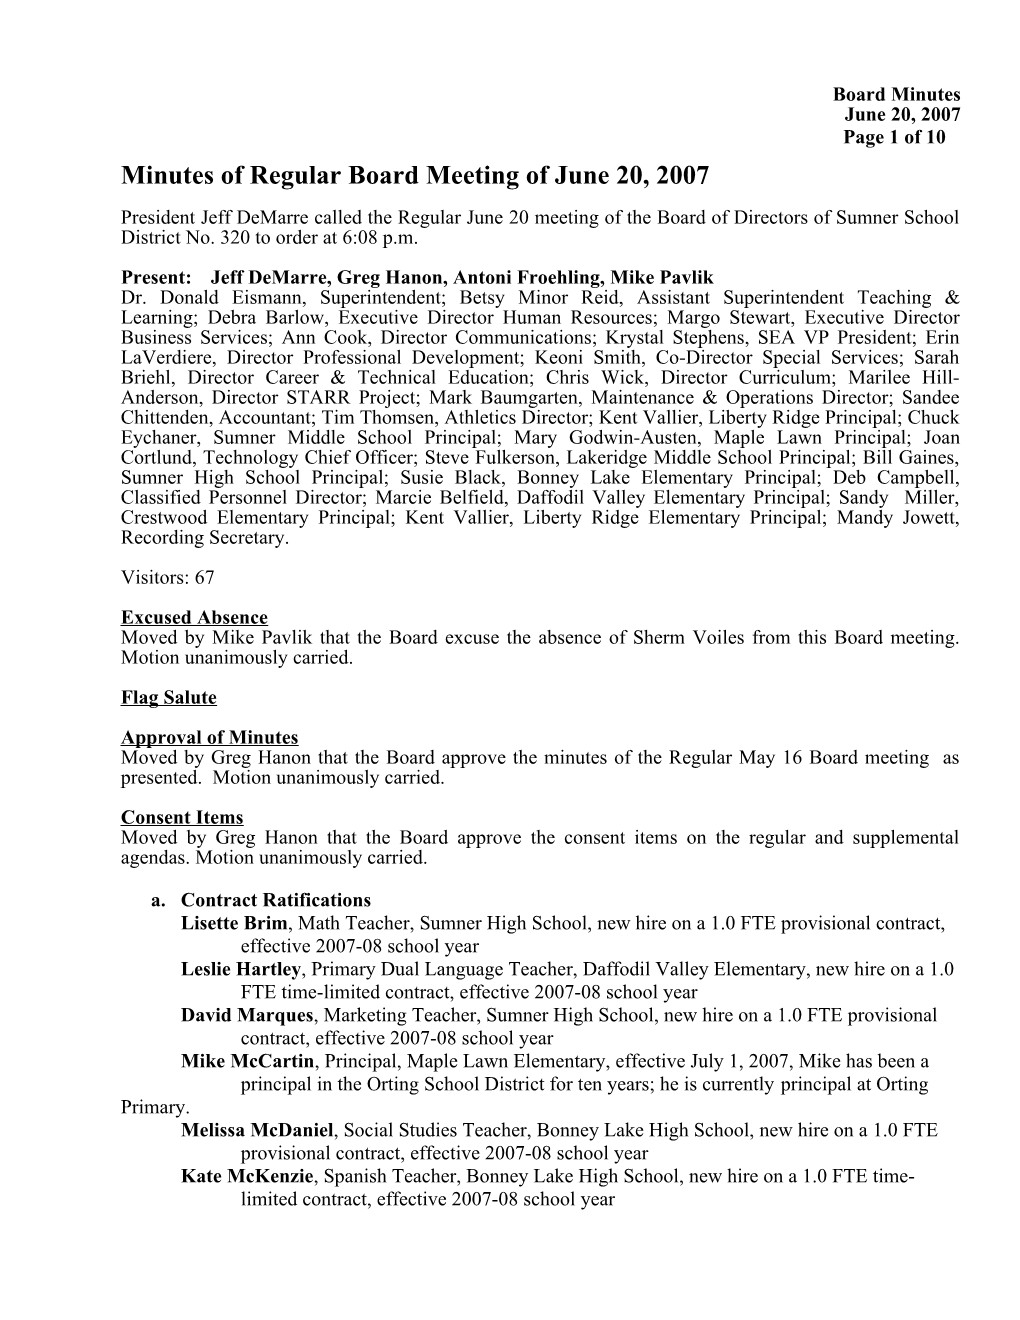 Minutes of Regular Board Meeting of June 20, 2007